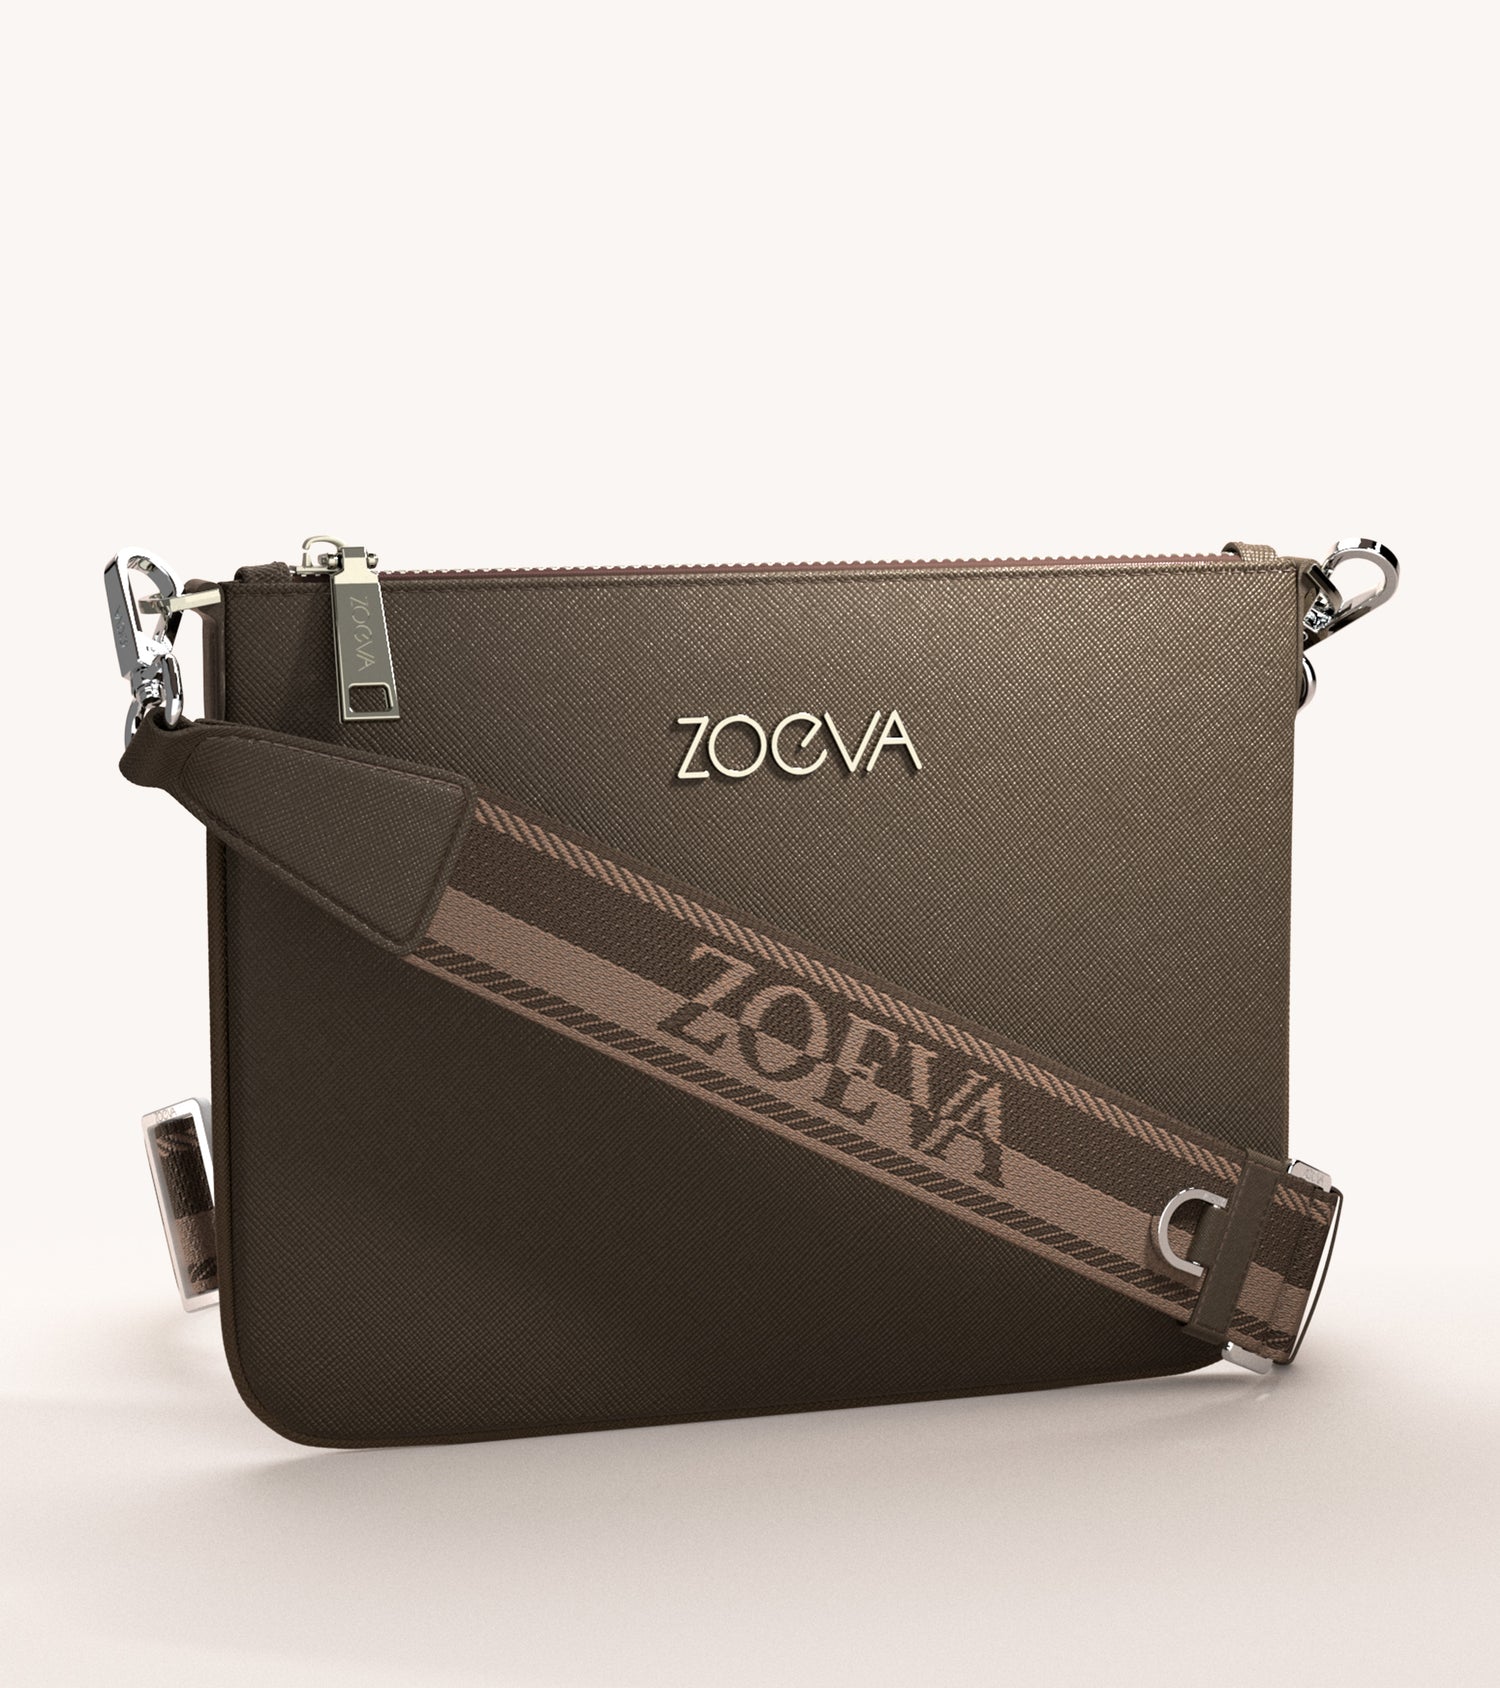 ZOEVA - The Everyday Clutch & Shoulder Strap (CHOCOLATE) - ACCESSORIES